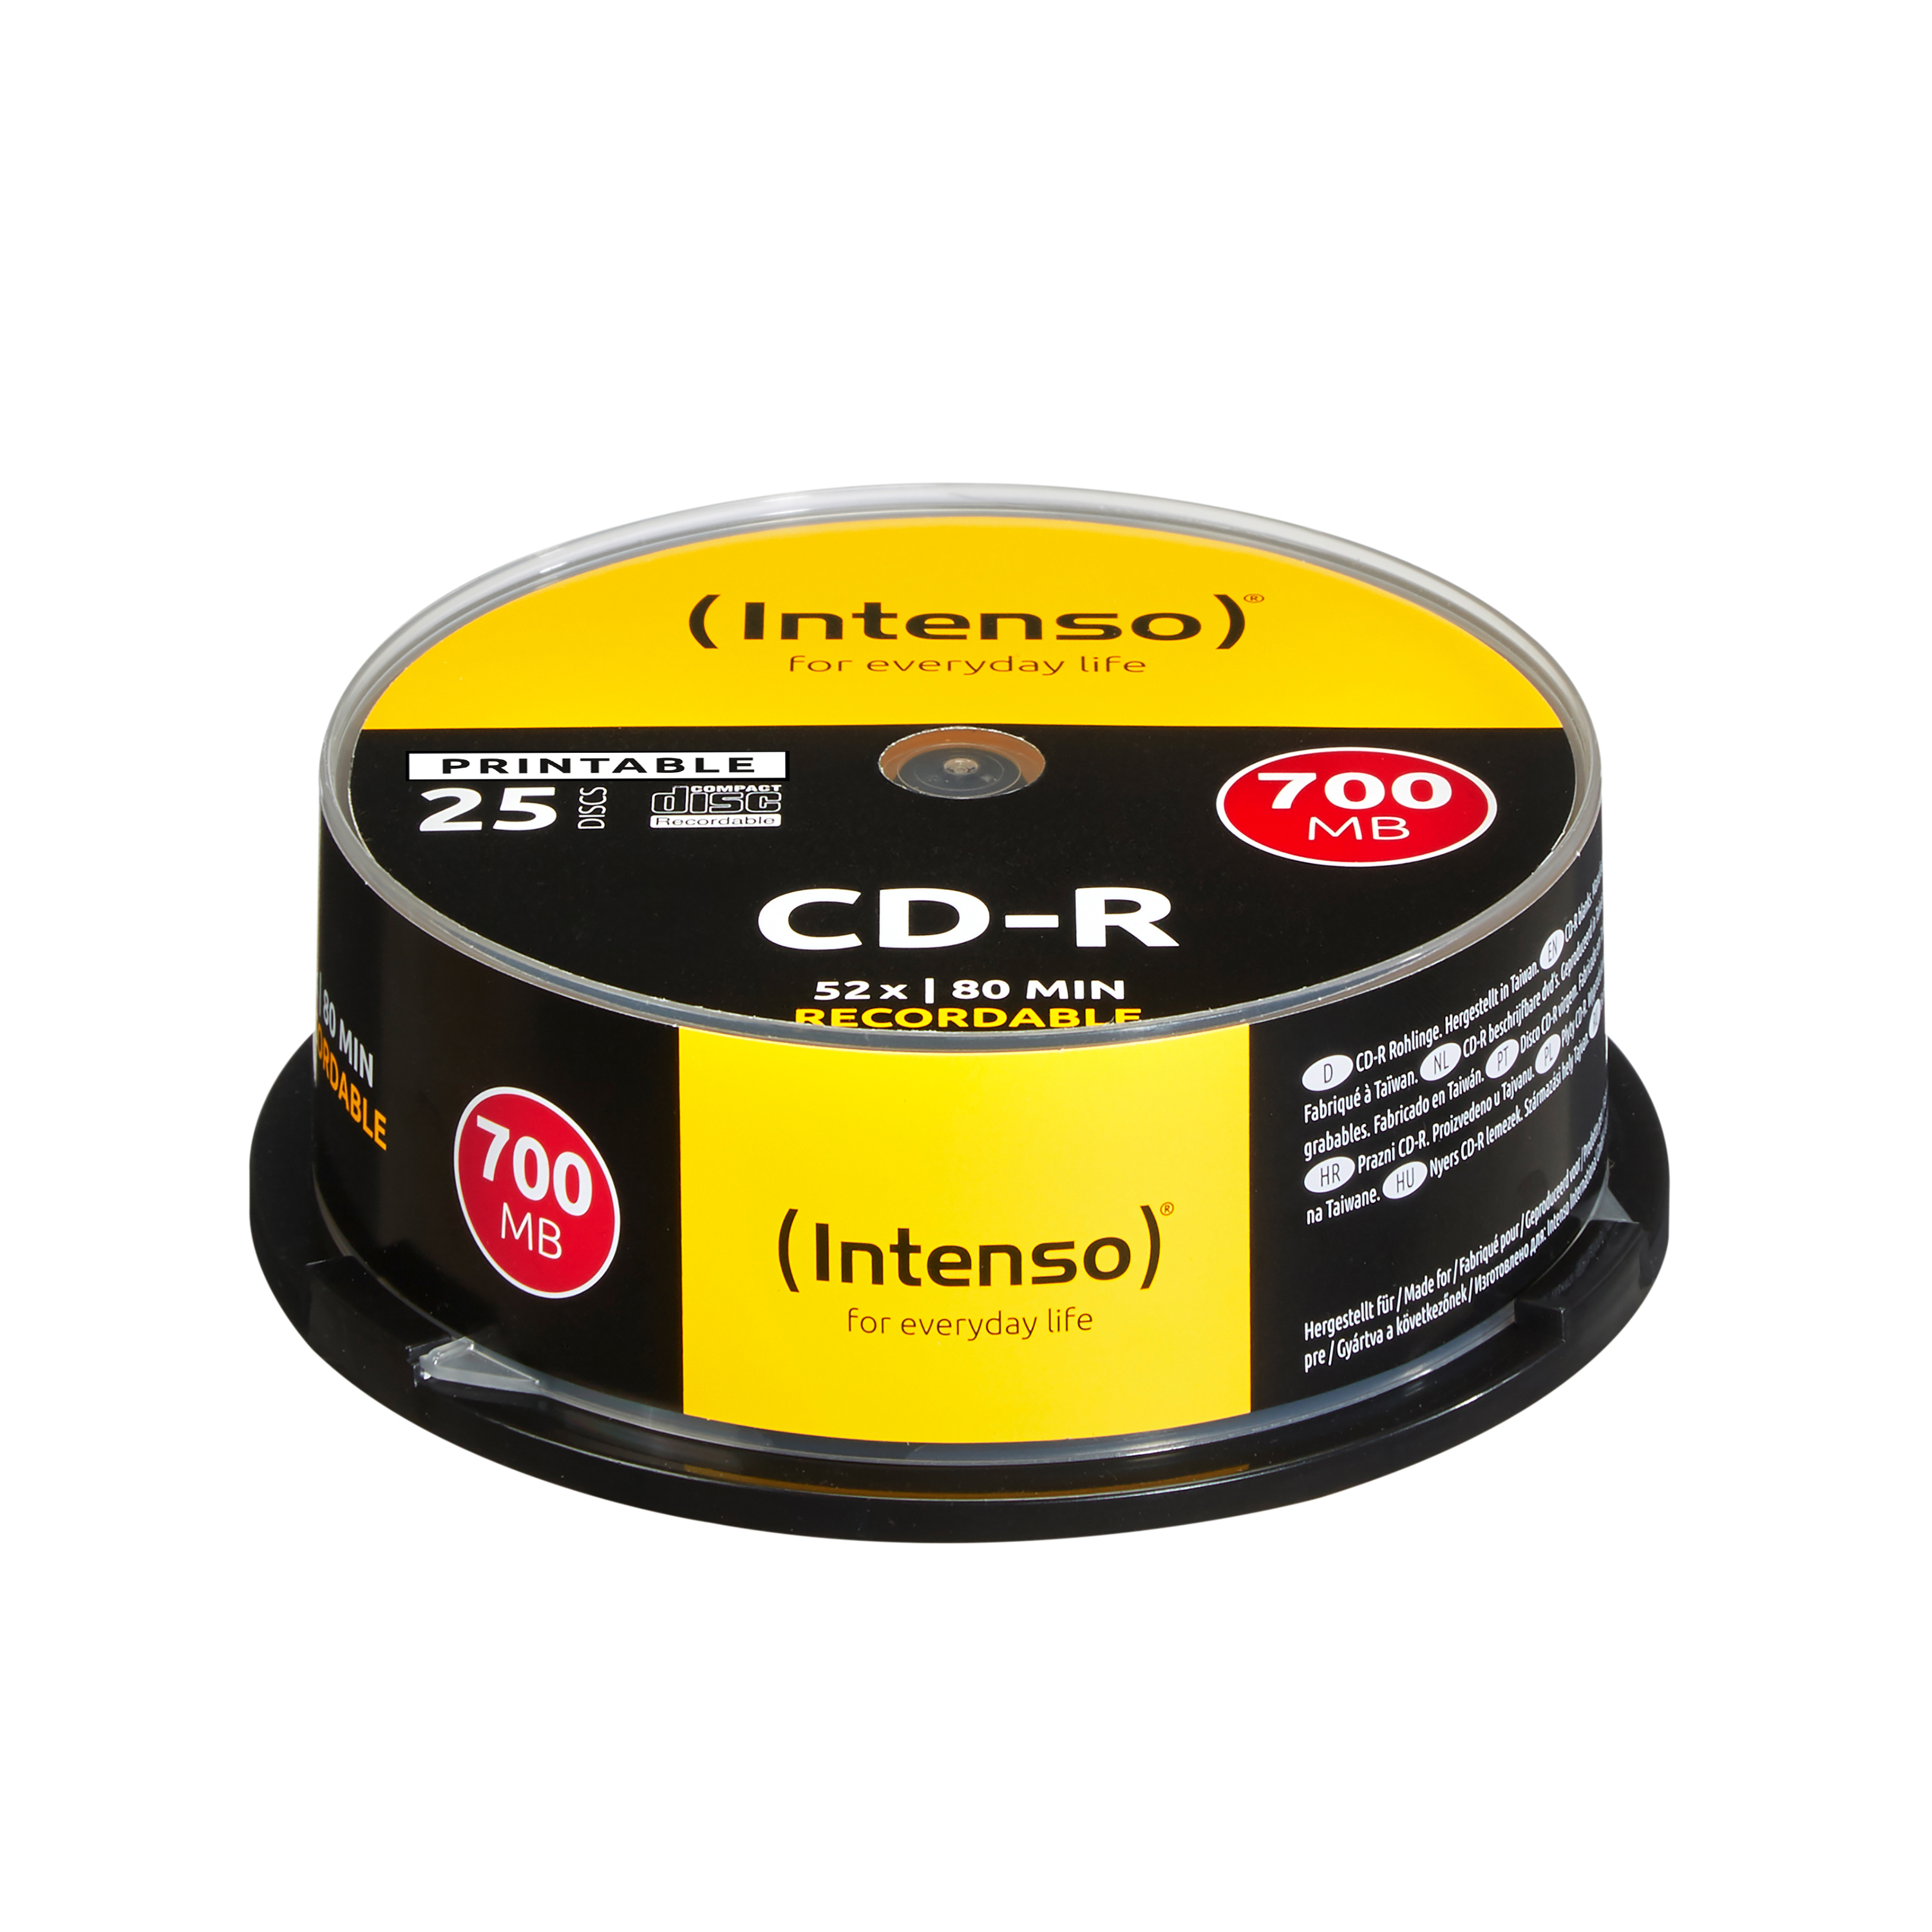 CD-R  Intenso 700MB  25pcs Cakebox printable inkjet  52